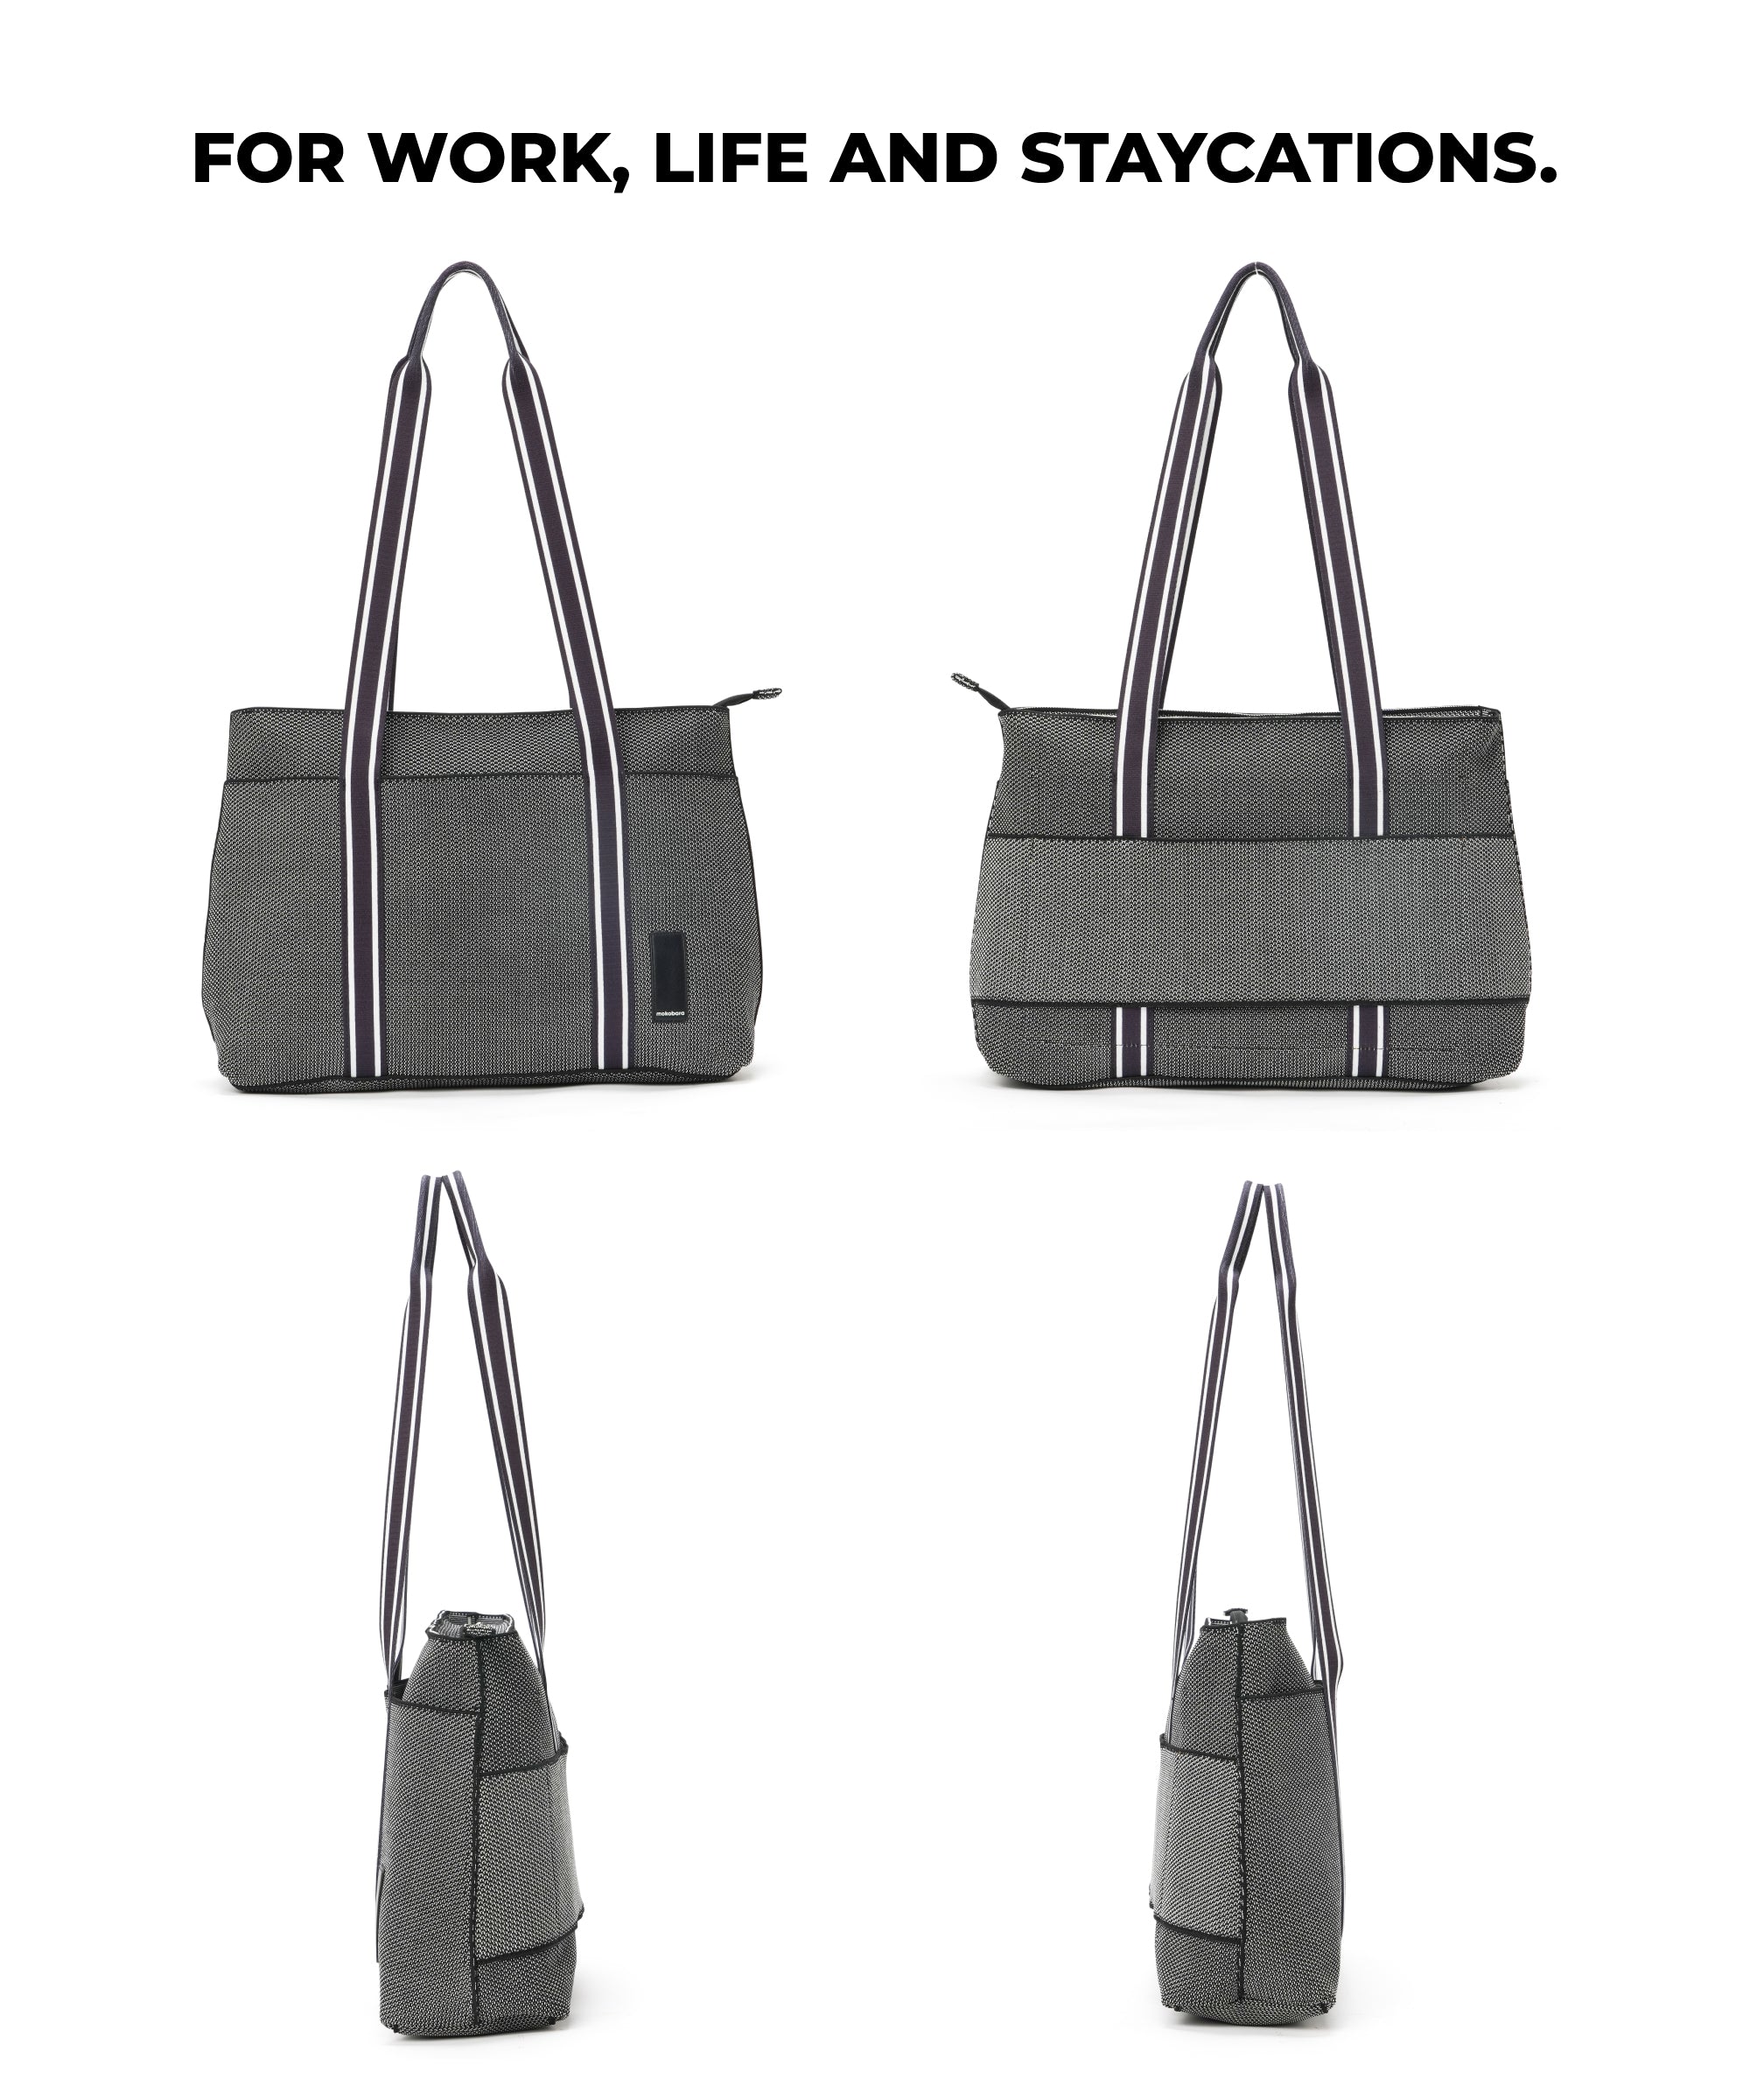 XOXO | Bags | Xoxo Black Gold Double Handle Satchel Bag Wgold Tone Hardware  | Poshmark